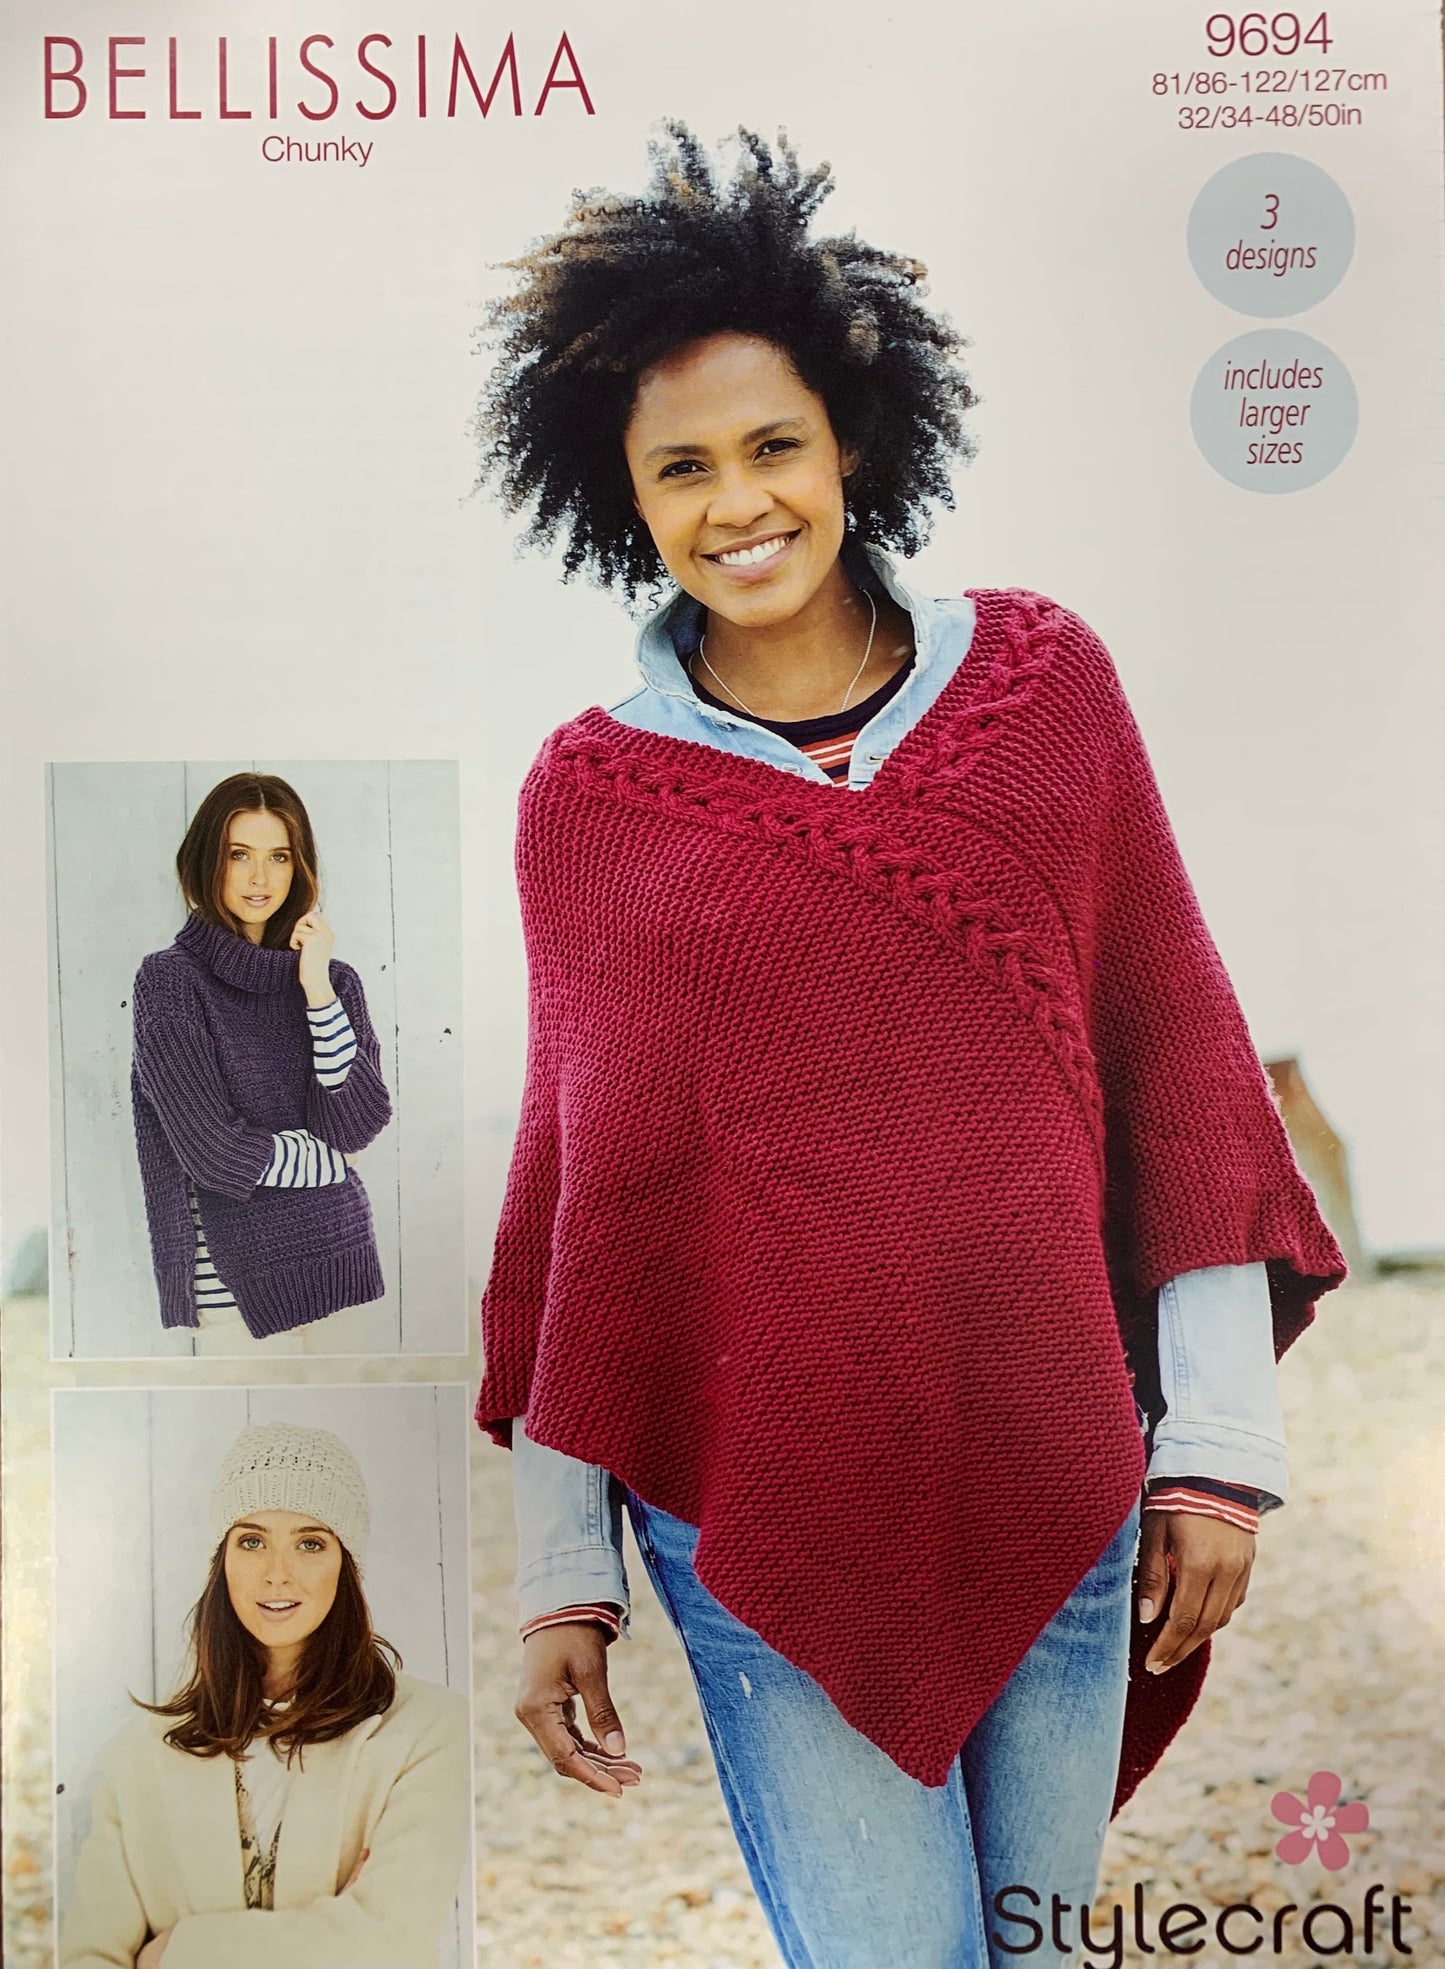 9694 Stylecraft Bellissima chunky ladies poncho, sweater and hat knitting pattern